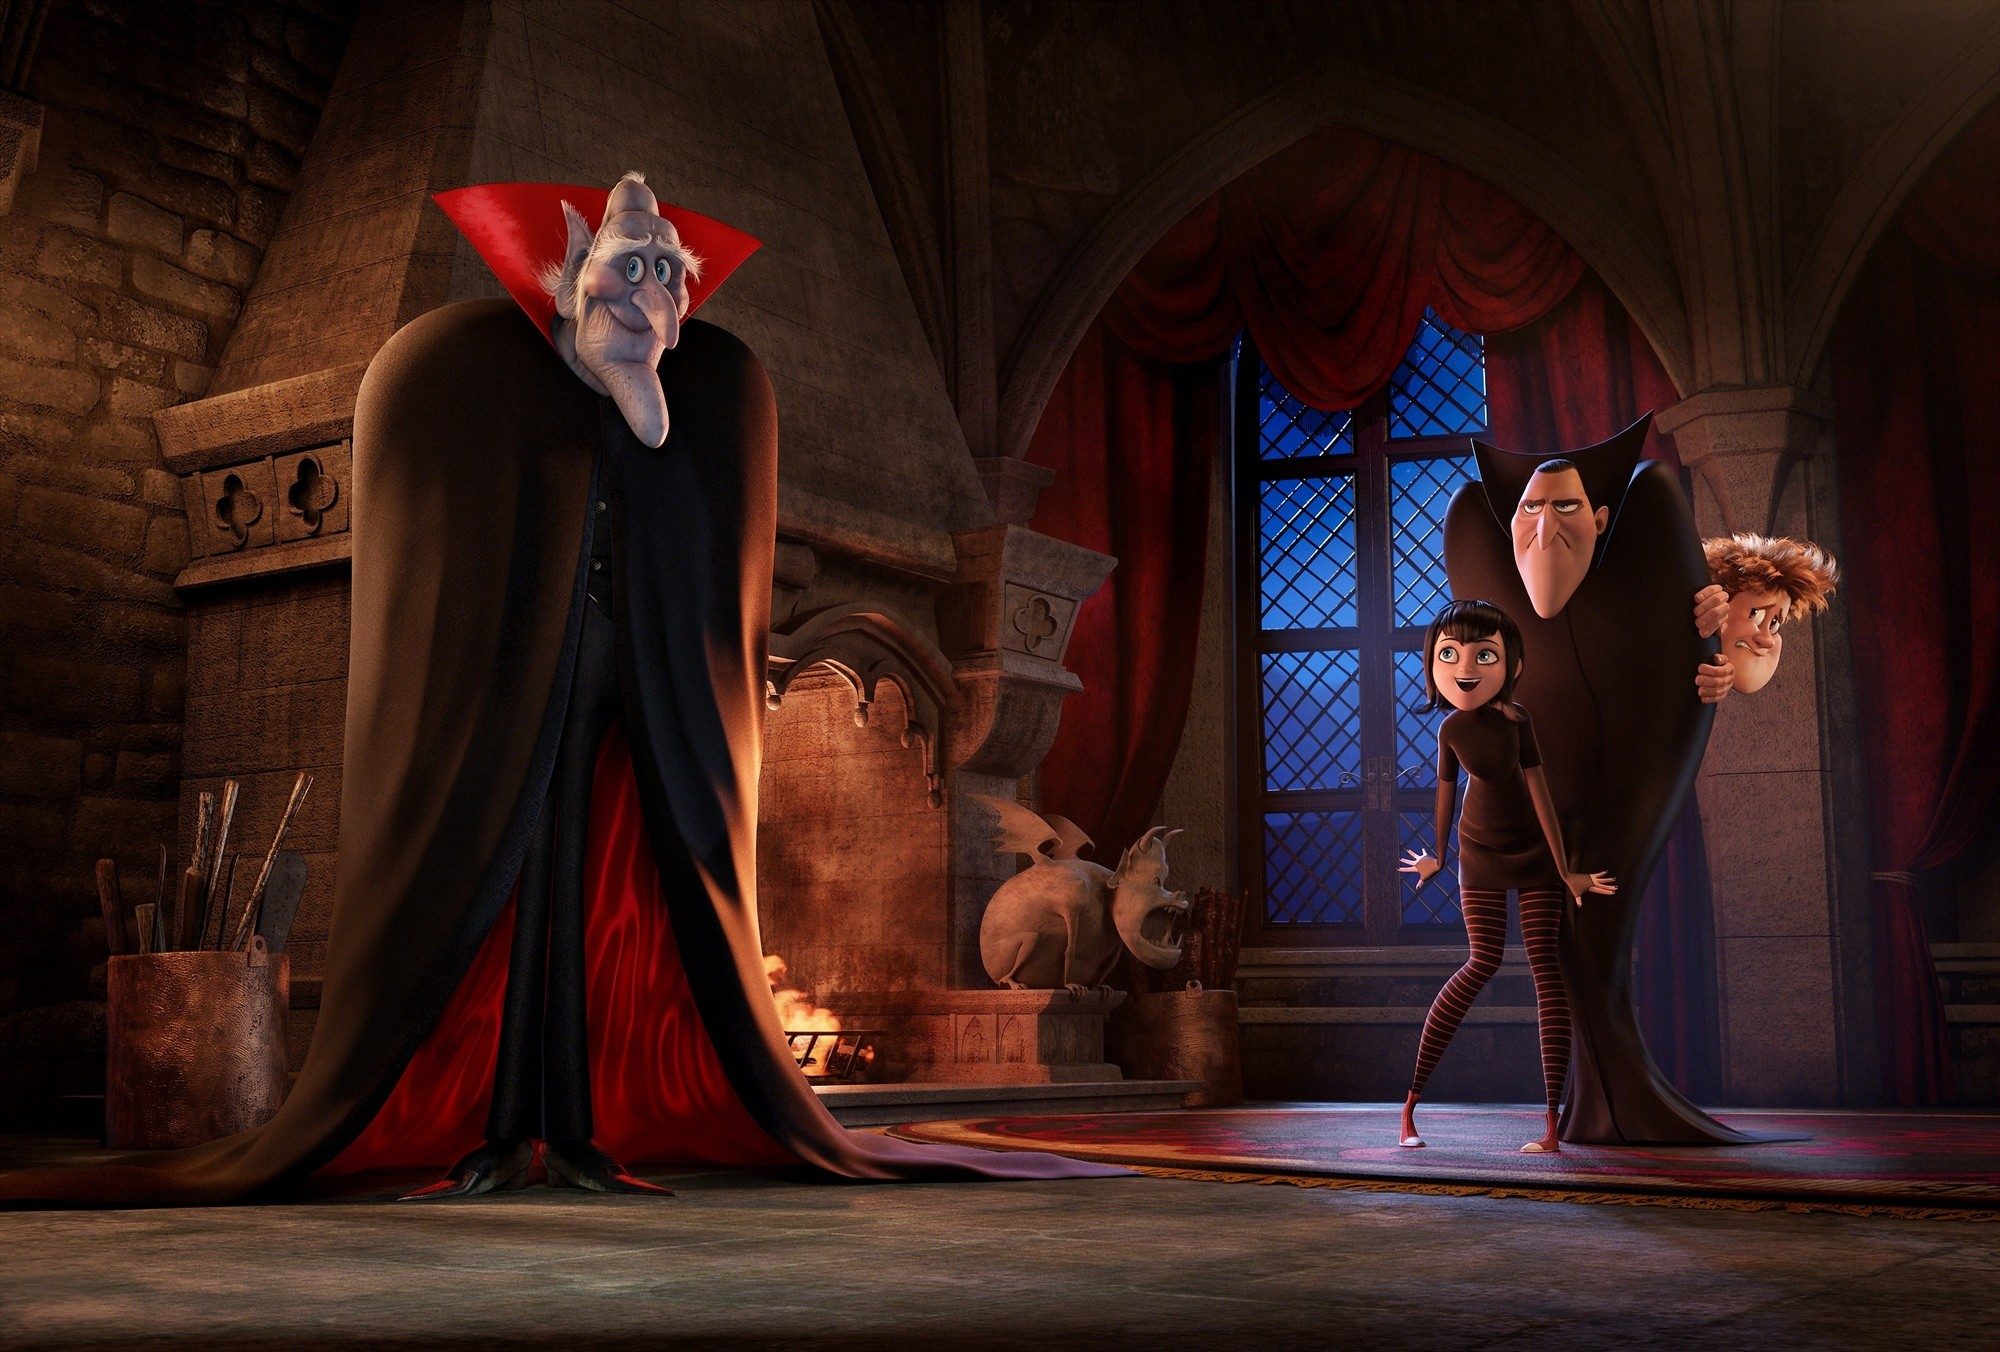 Vlad, Mavis, Dracula and Jonathan in Columbia Pictures' Hotel Transylvania 2 (2015)